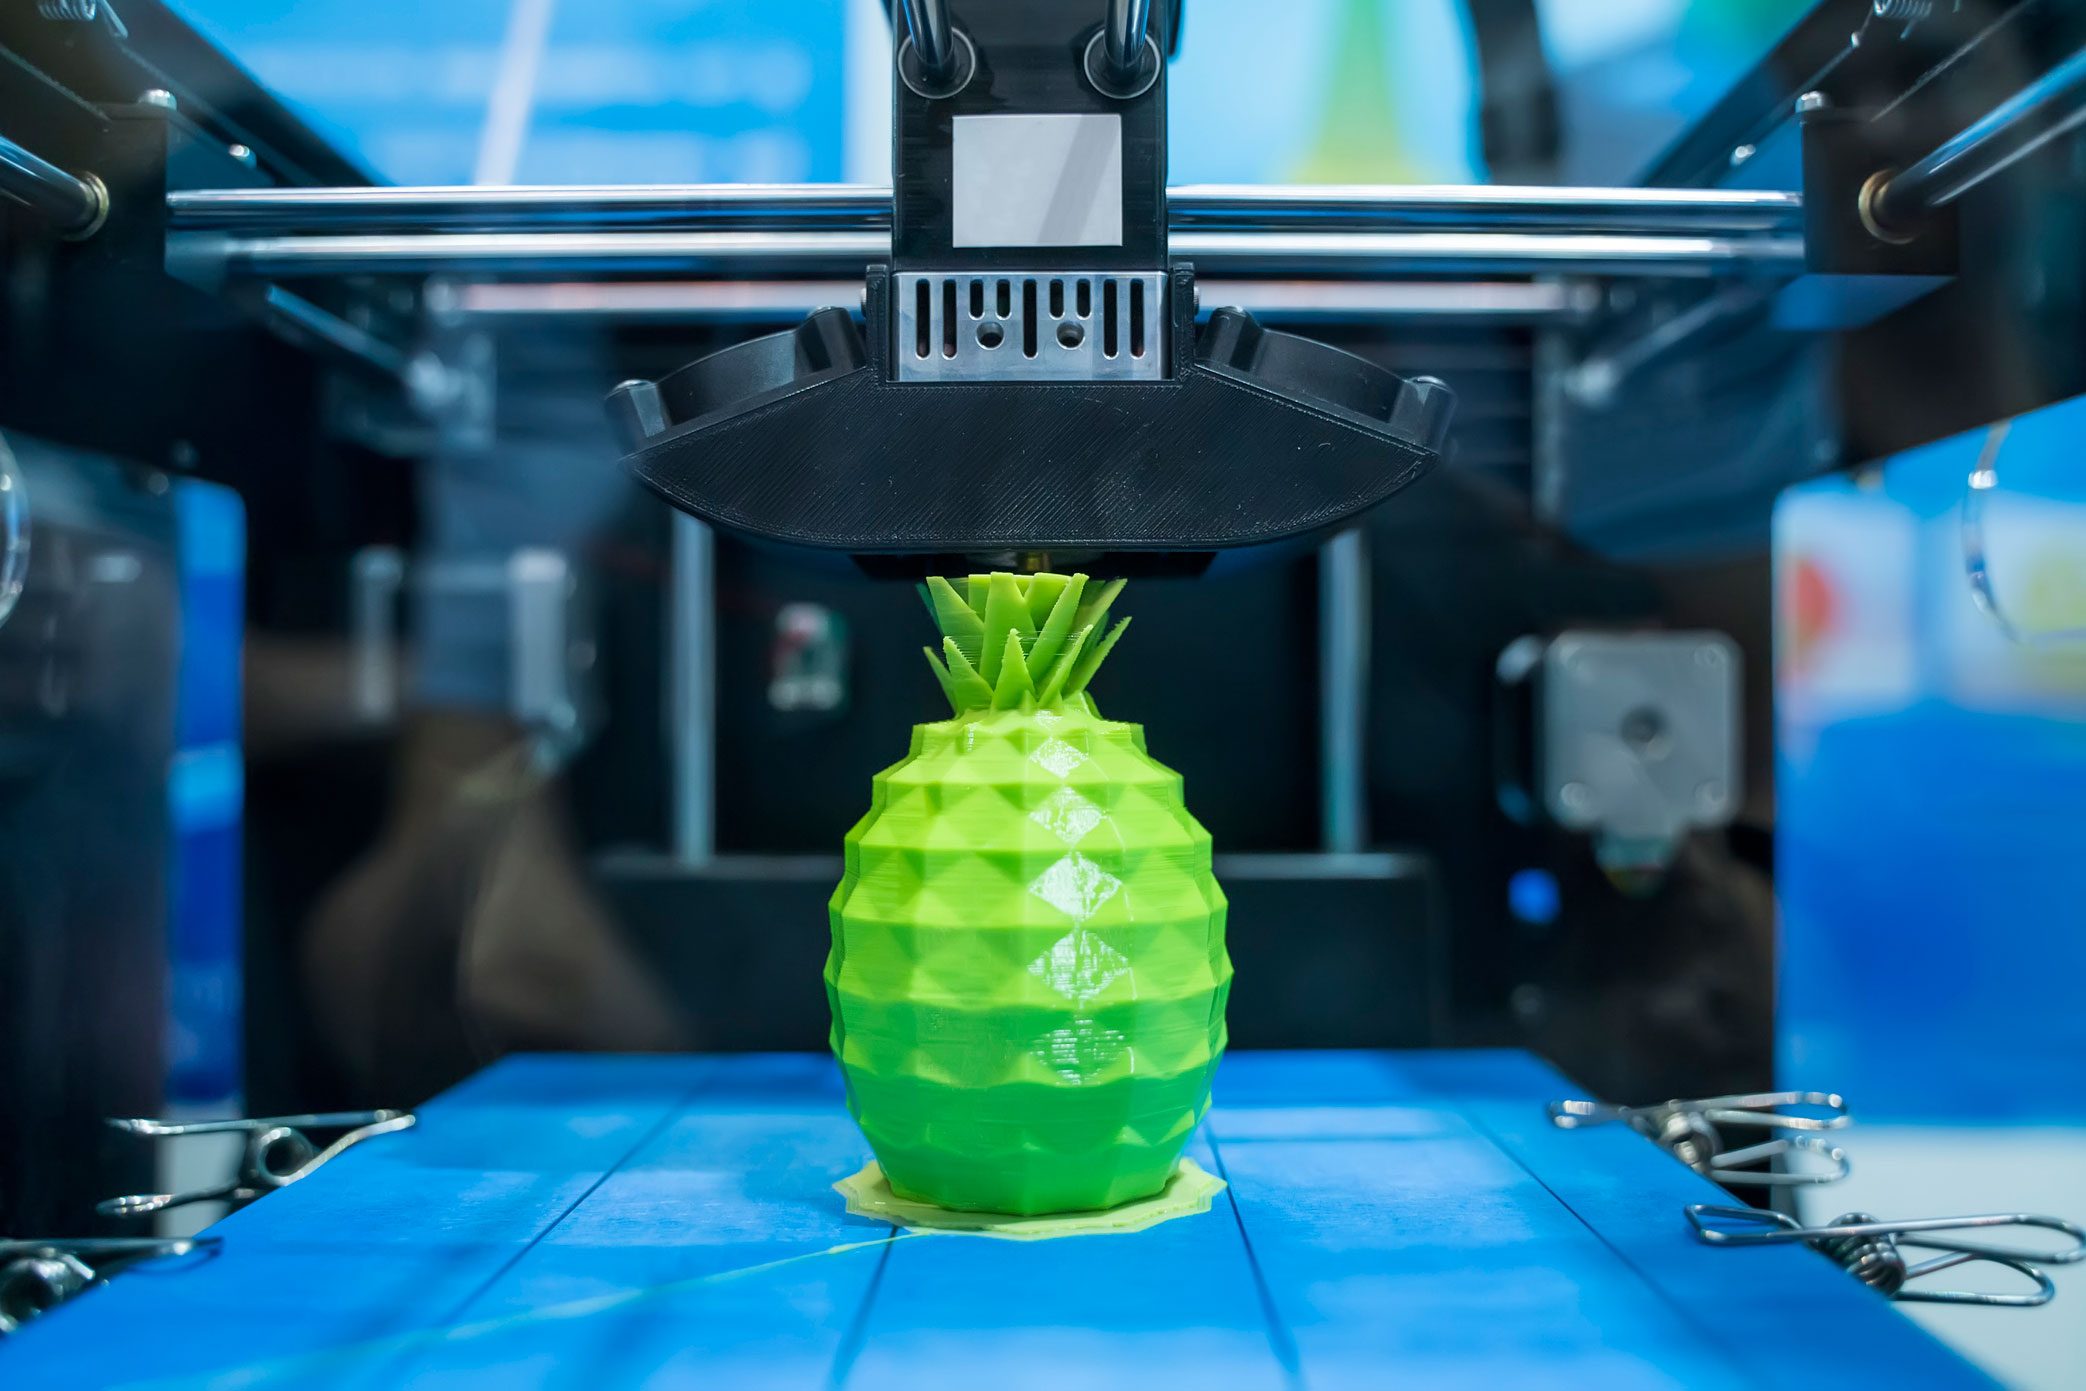 Vidunderlig Humoristisk brugerdefinerede How Do 3D Printers Work? Plus, How 3D Printing Is Being Used Now